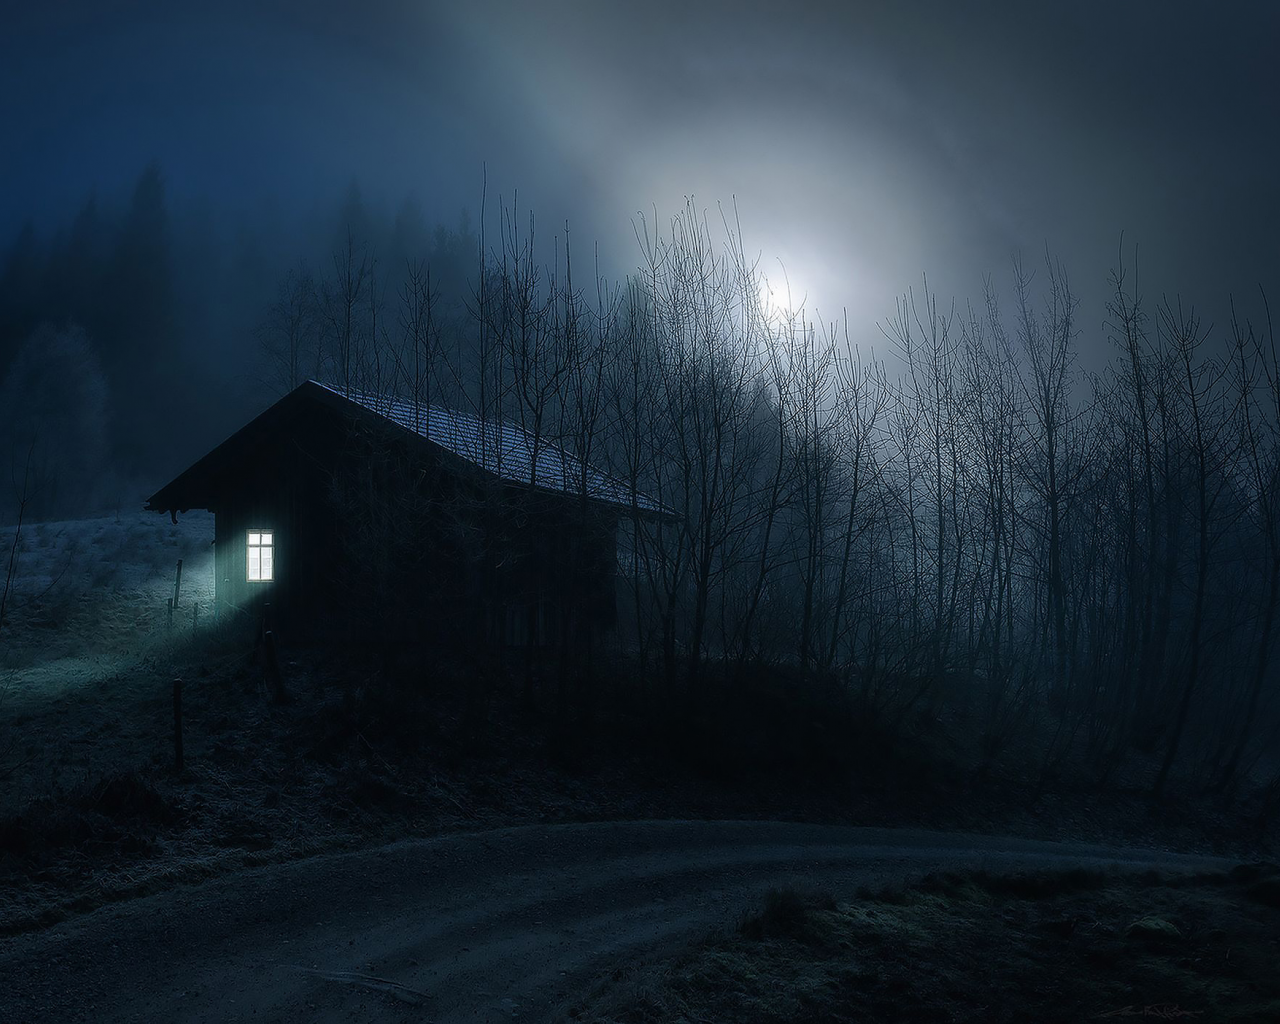 тихая ночь, дом, лес, луна, дорога, stille nacht, house, night, moon, forest, road, see, sky, dark, nice, wide